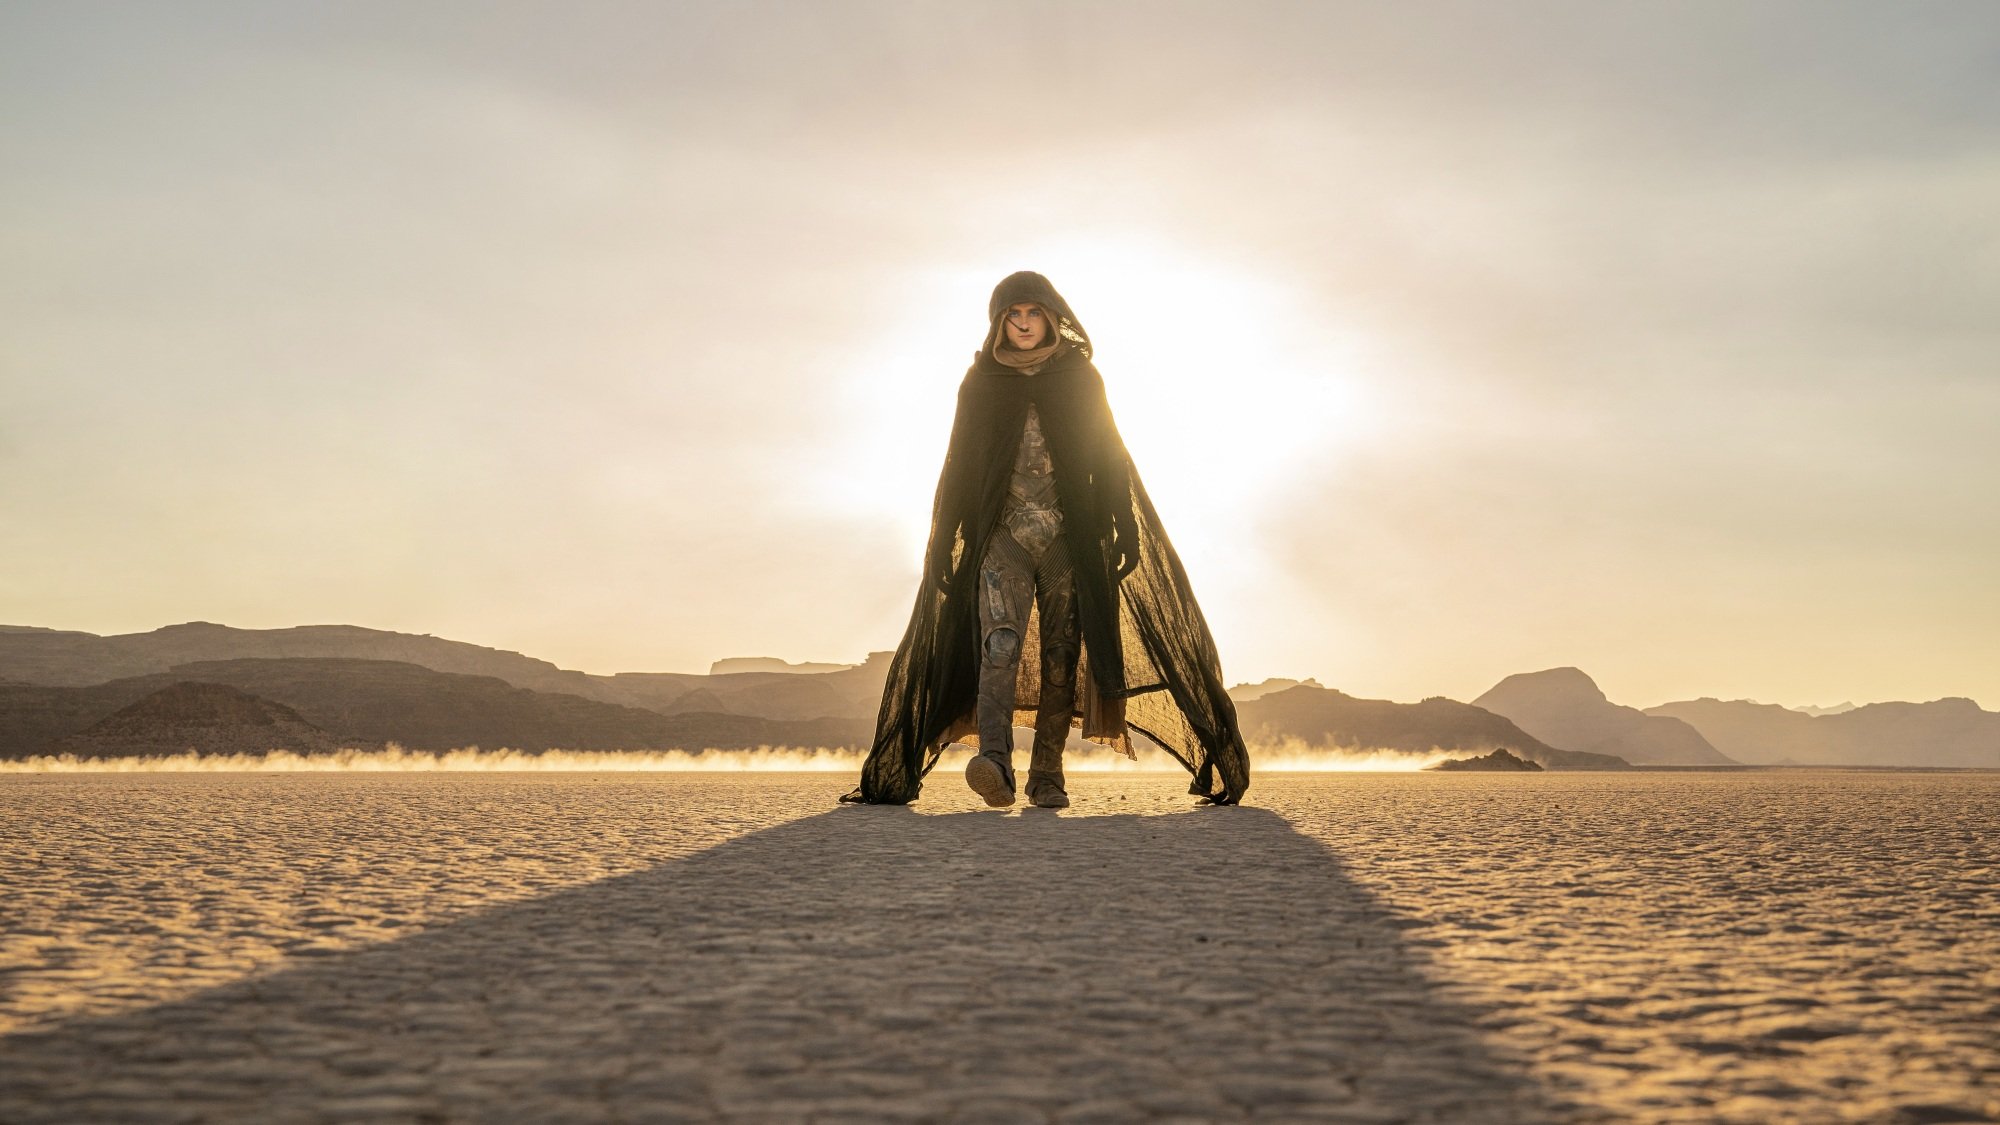 Paul Atreides walks through the desert with the sun at his back, wearing a Fremen stillsuit and cloak.